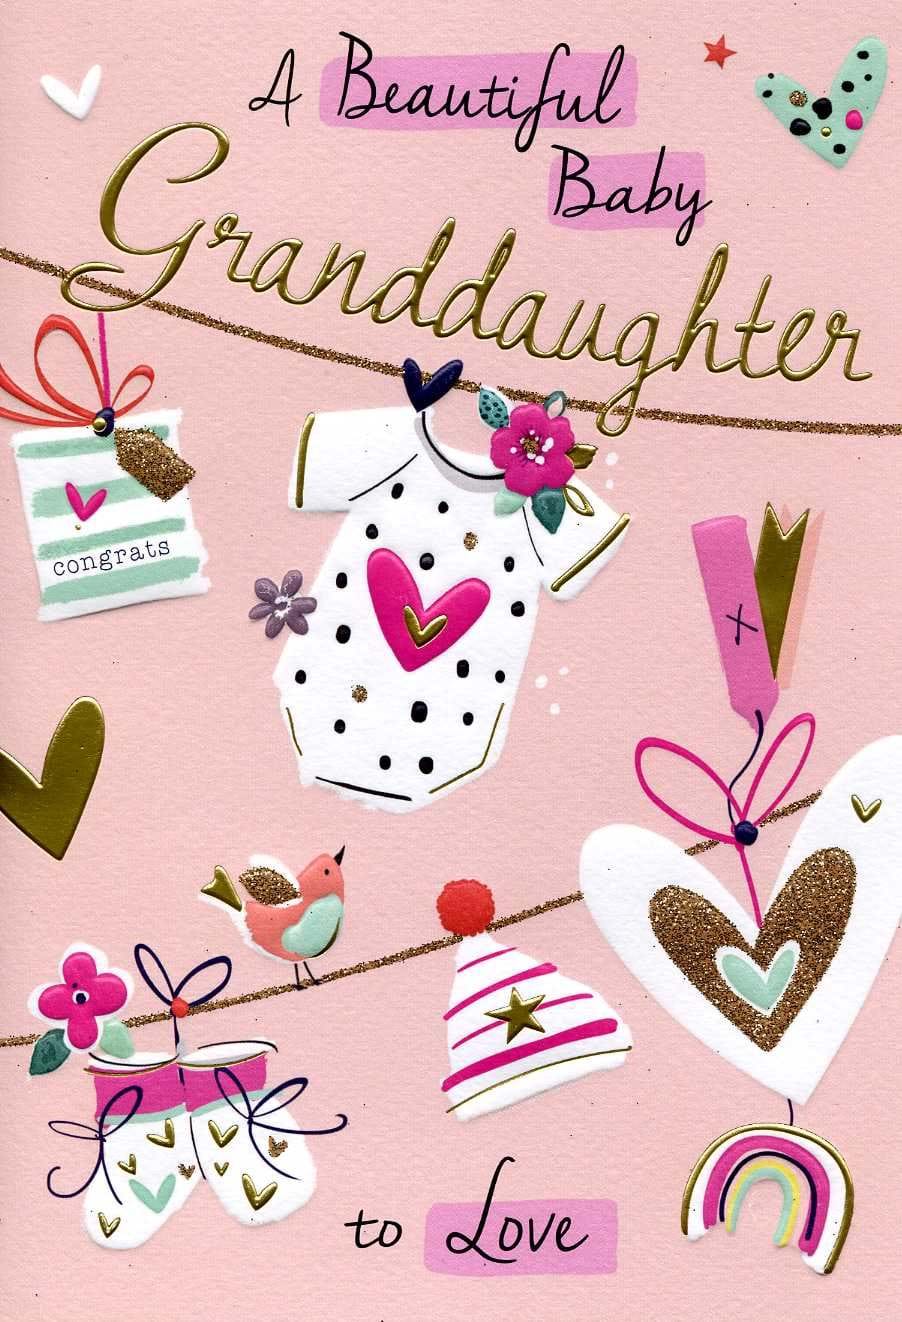 Beautiful New Baby Granddaughter Card